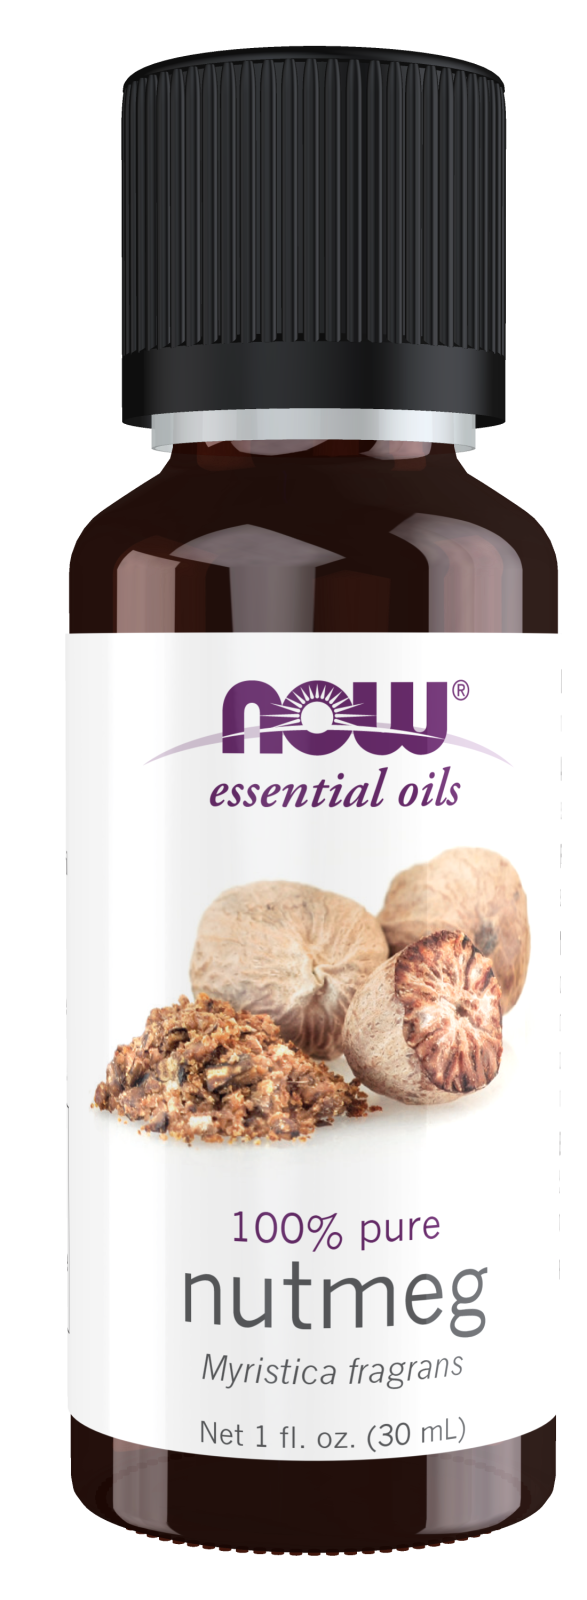 Essential Oil Nutmeg at Whole Foods Market